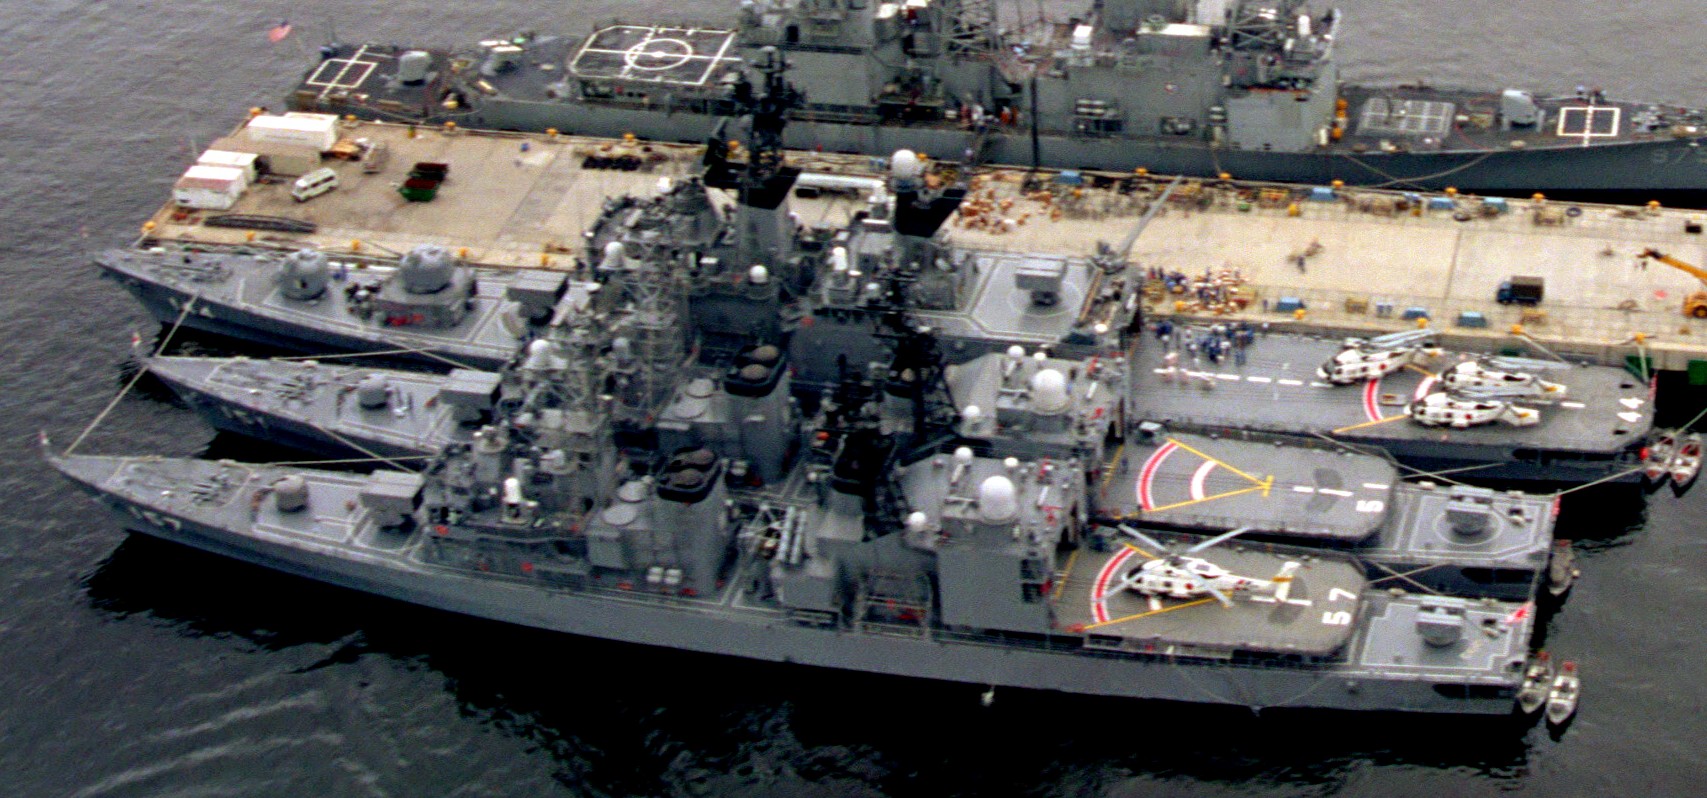 dd-157 jds sawagiri asagiri class destroyer japan maritime self defense force jmsdf 15x